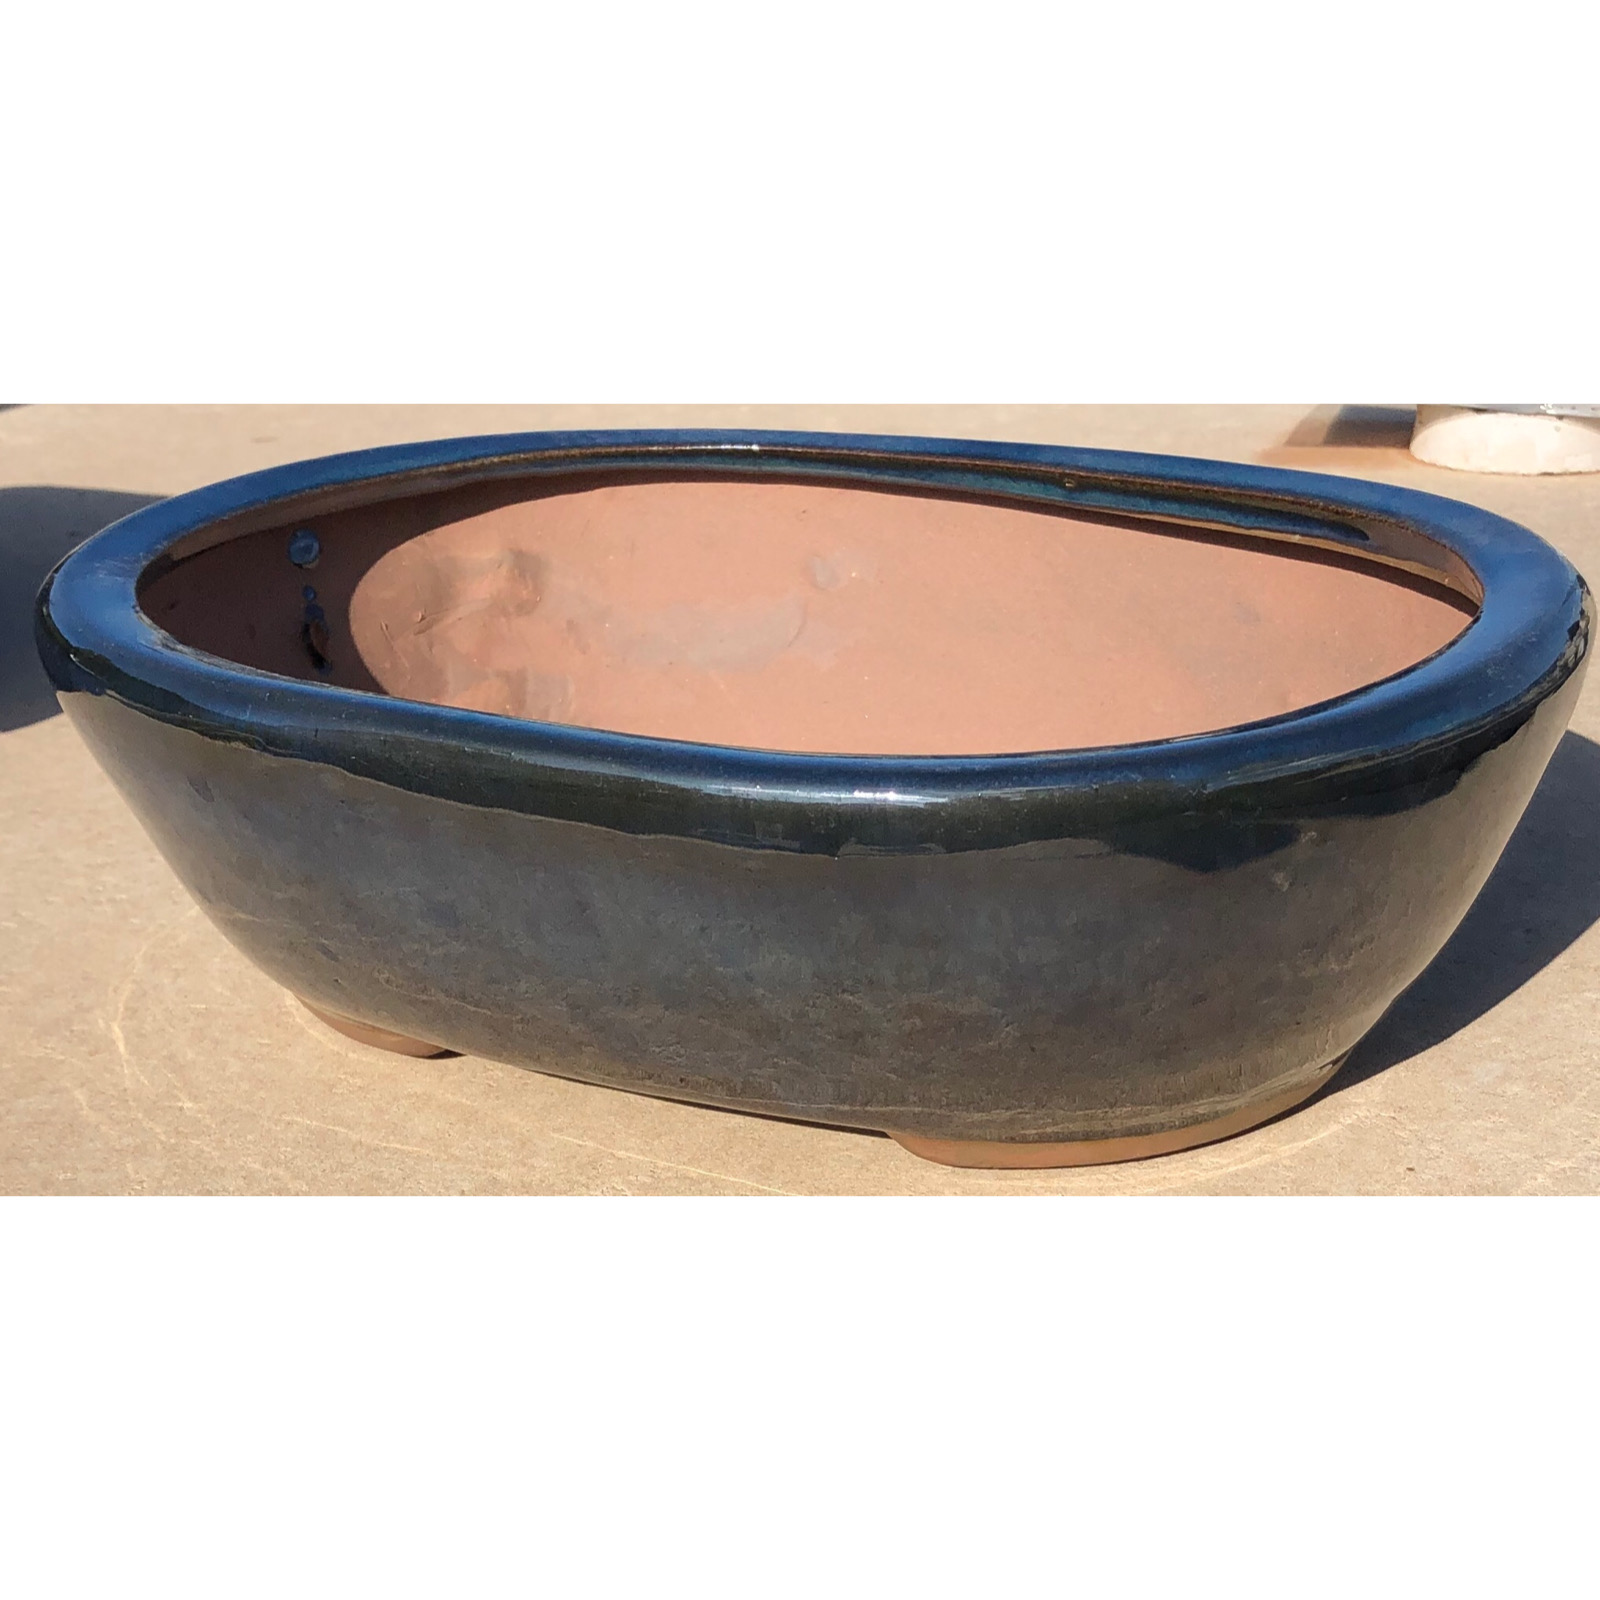  Oval  Bonsai  with Legs Pot  Pots  n Pots 